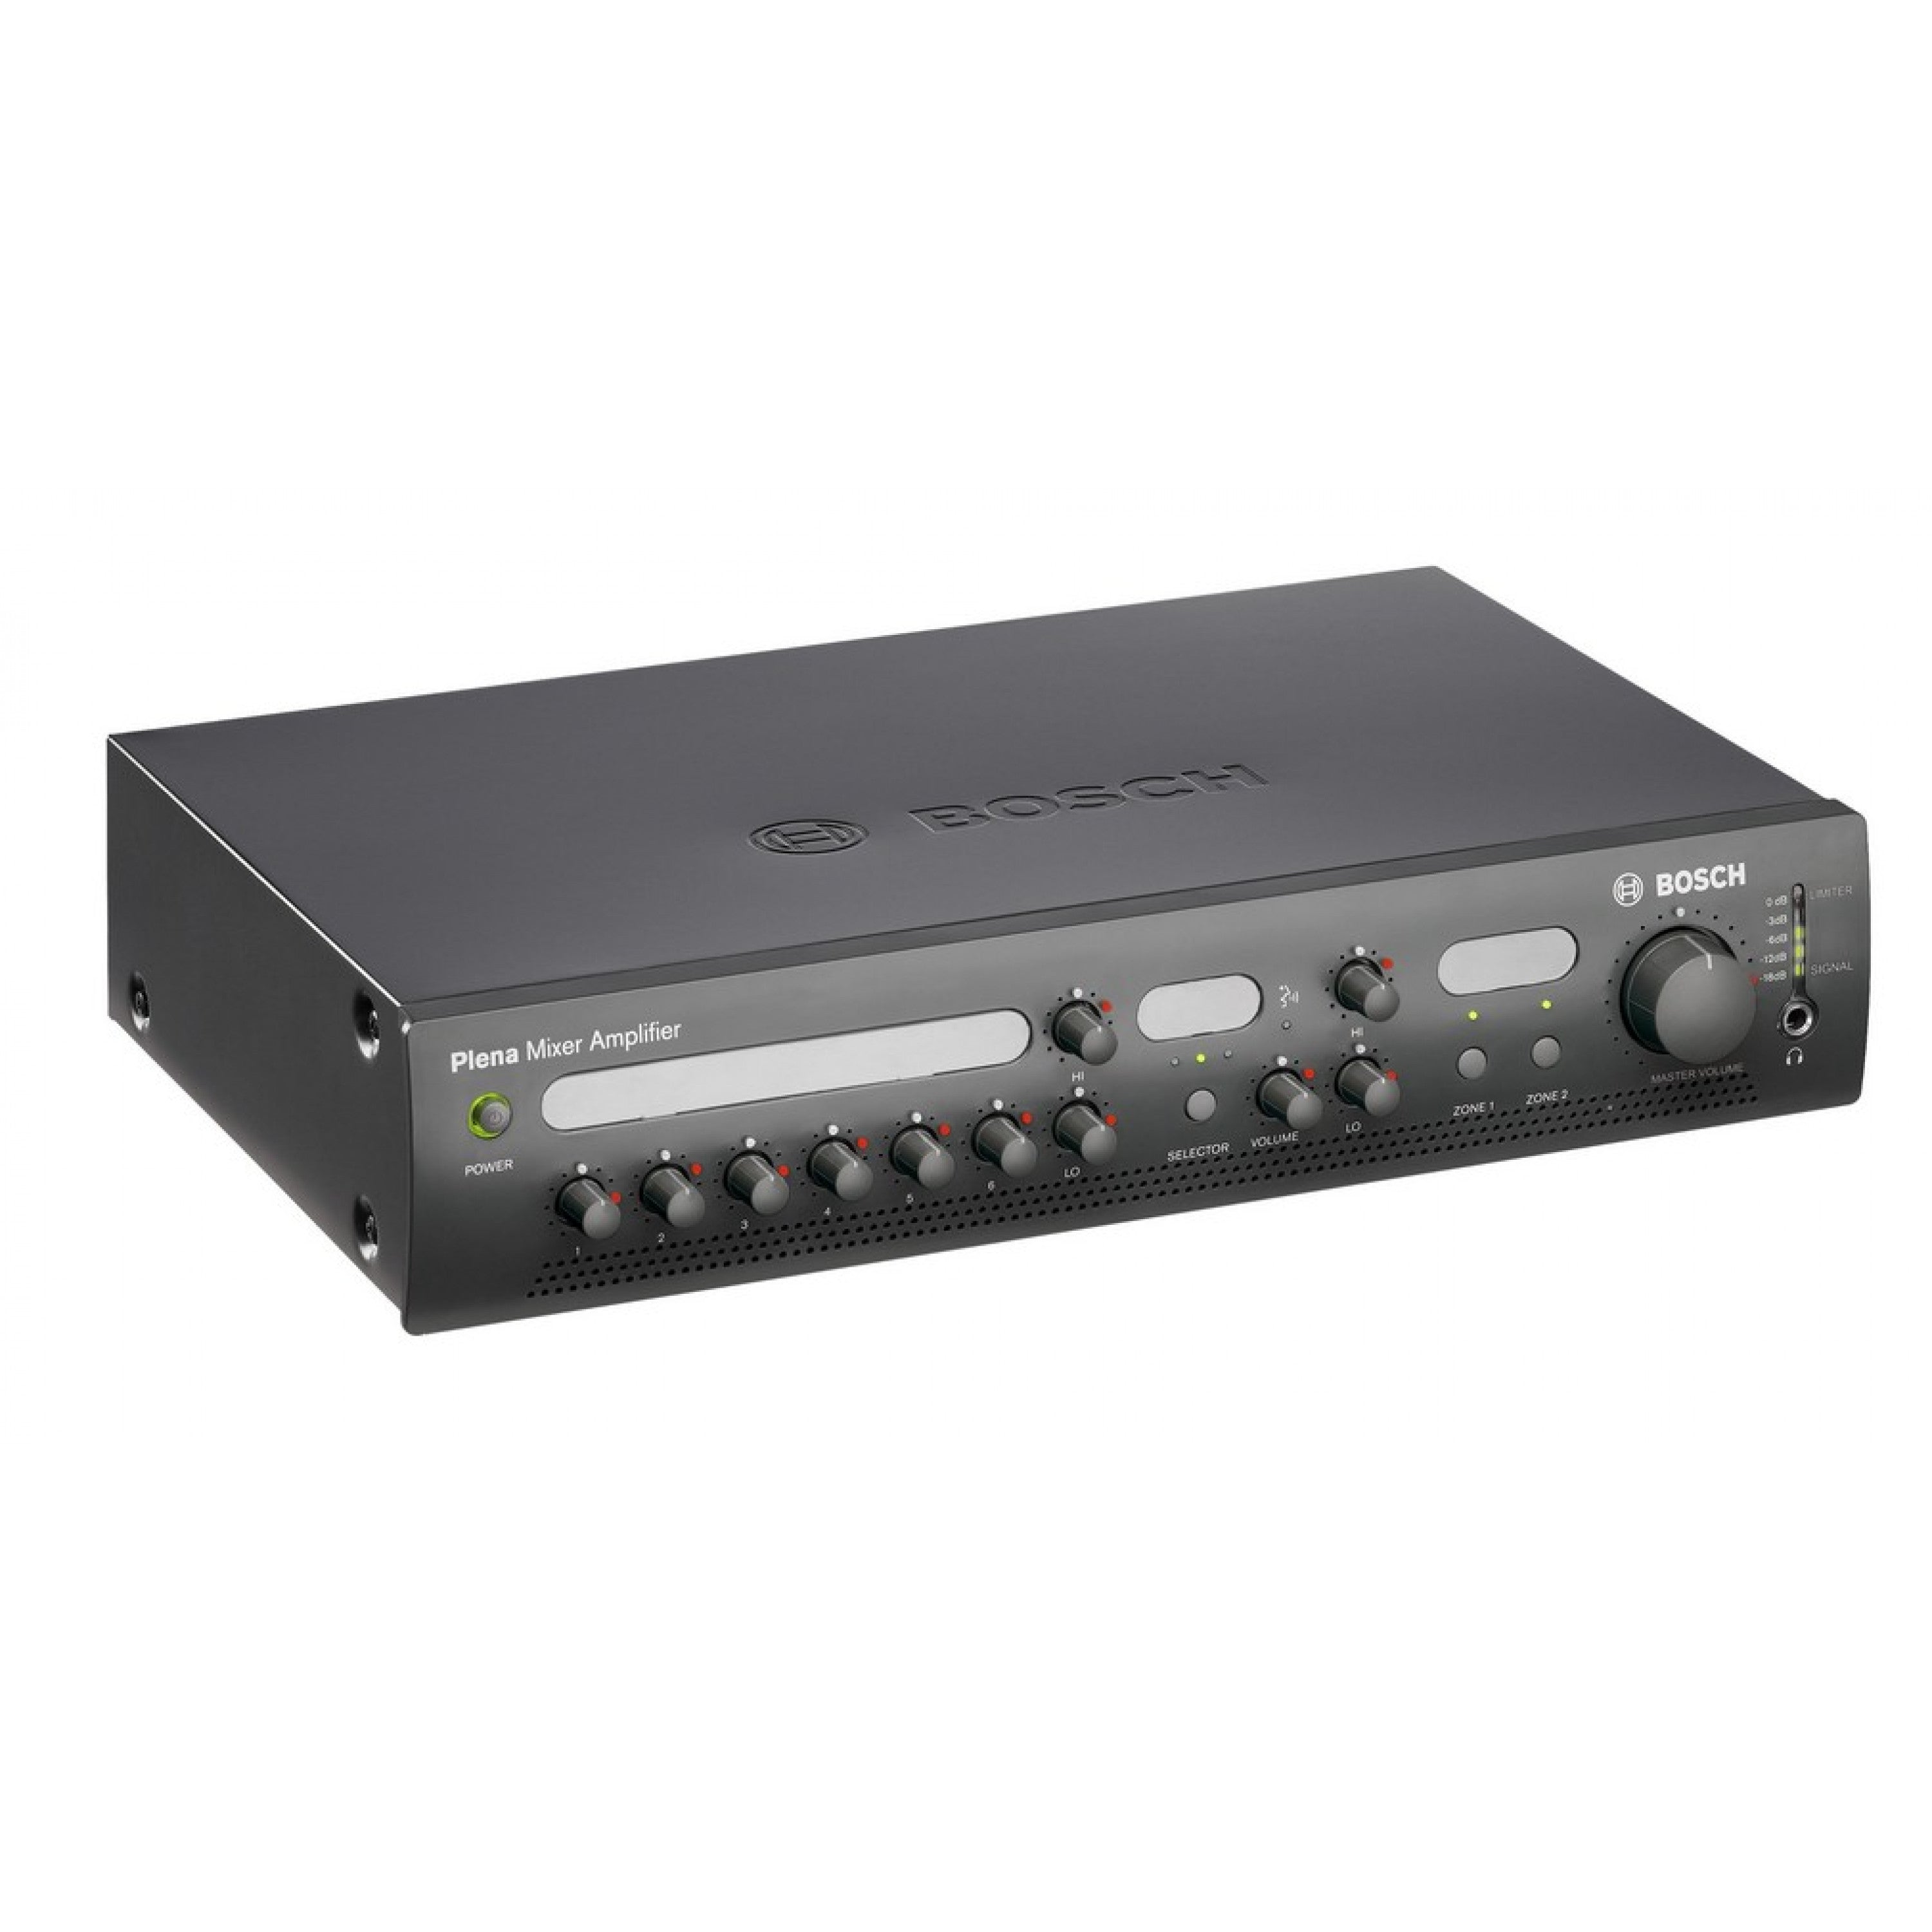 Bosch PLE‑2MAxx0‑EU PLENA Mixer amplifier